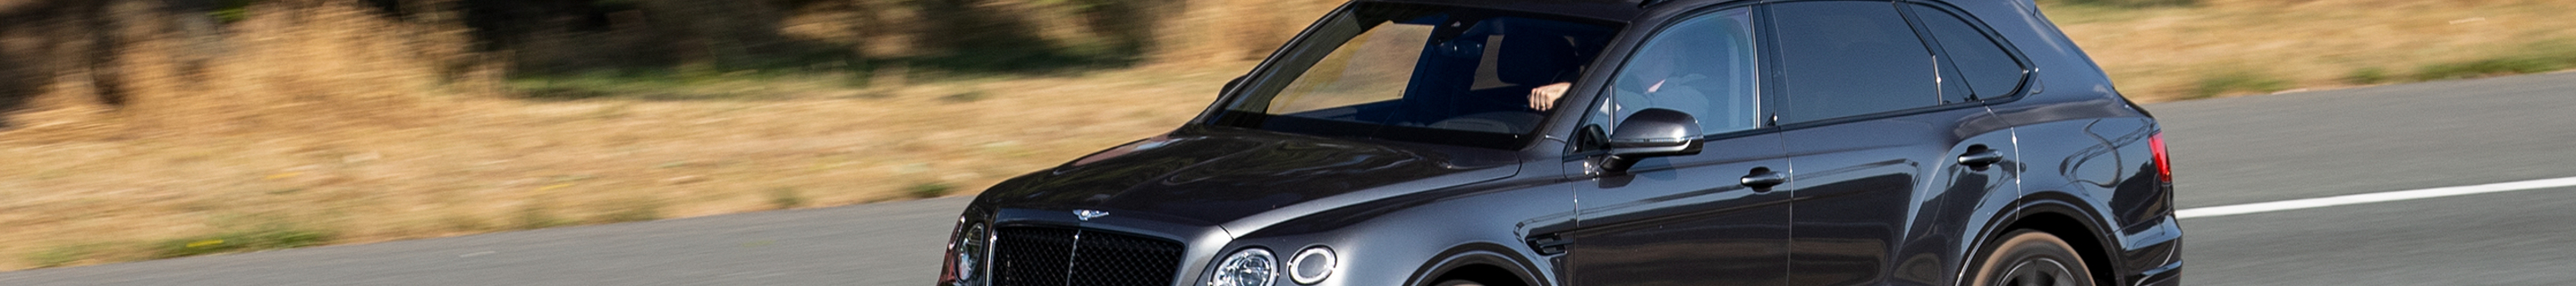 Bentley Bentayga V8 Design Series